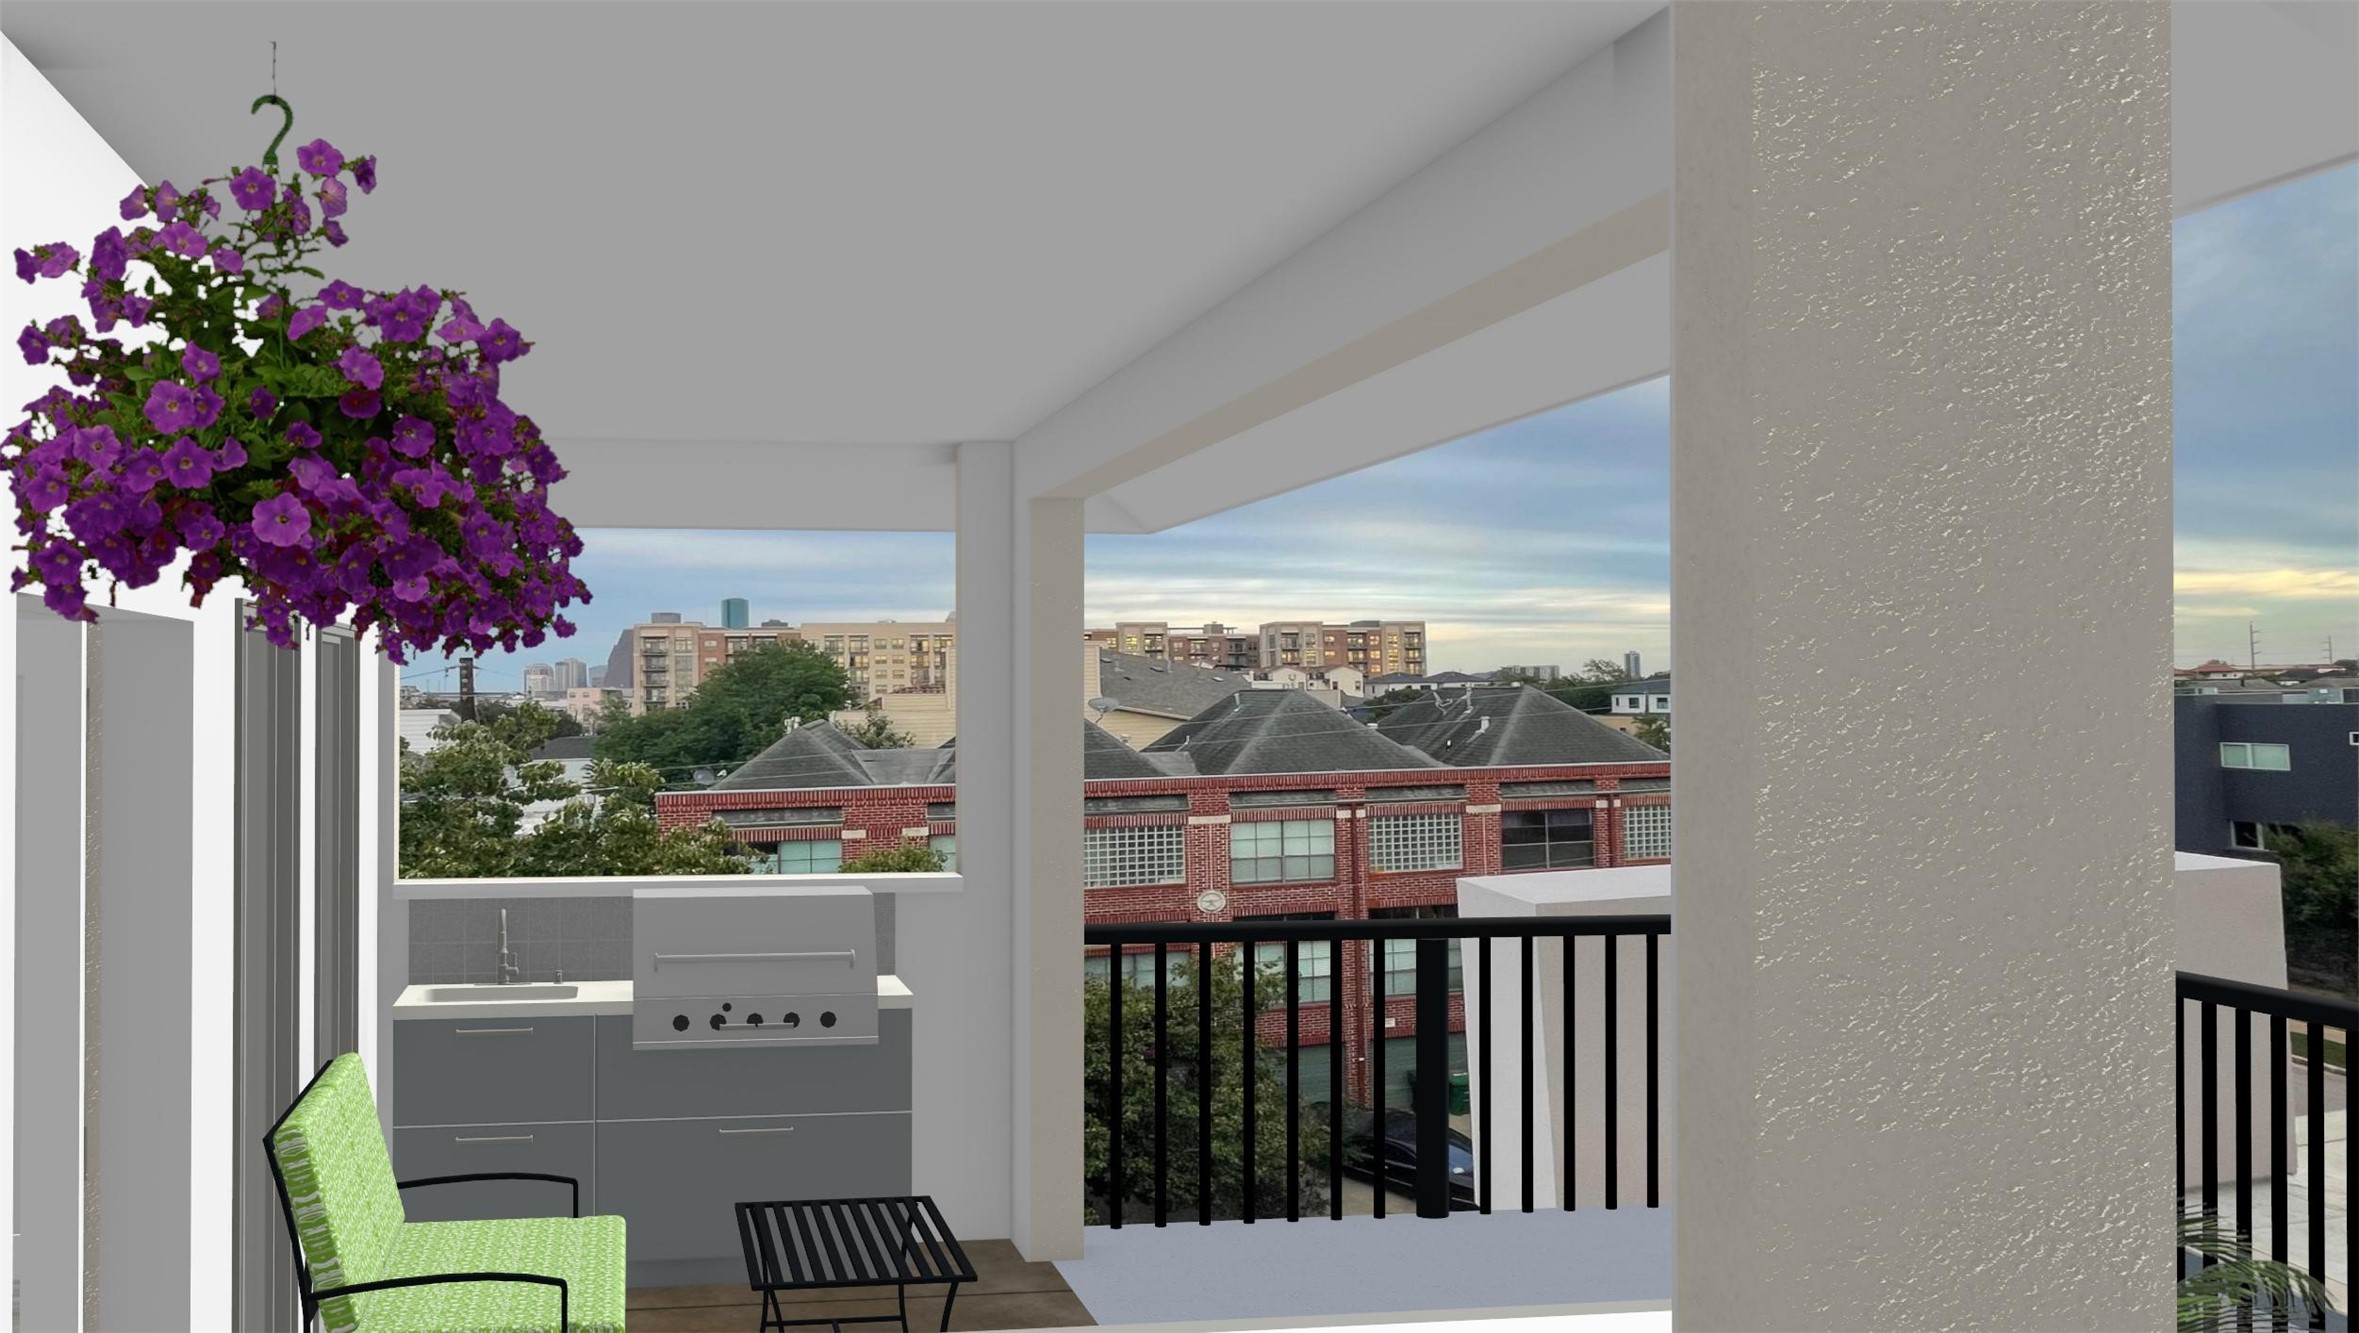 A rendered model illustration of Sage Sky Estates rooftop deck / outdoor kitchen view.